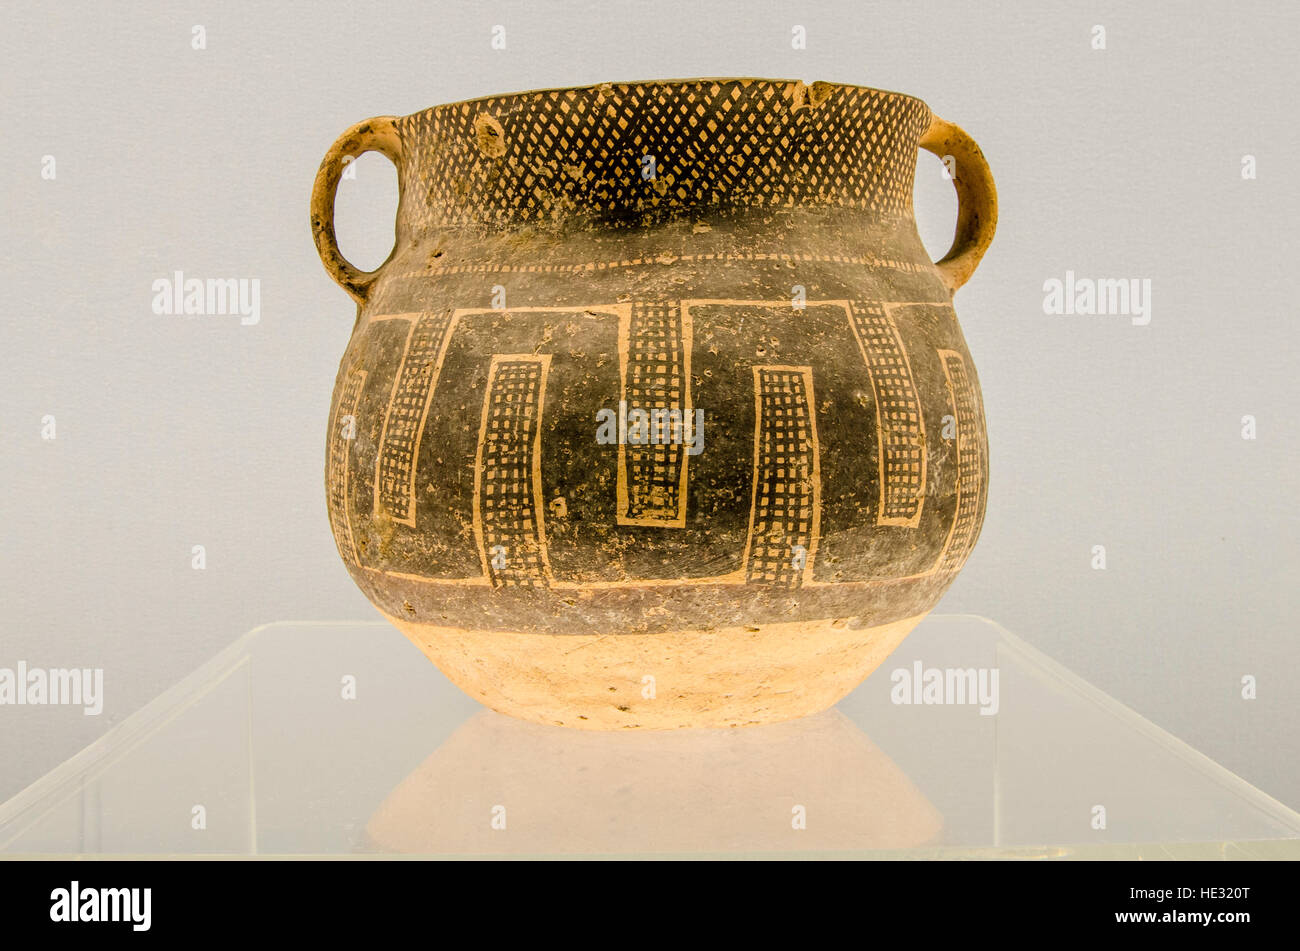 Antike Porzellan Keramik-Keramik Vase Gefäß Glas Schüssel Zick Zack Muster Ausstellung im Shanghai Museum, Shanghai, China. Stockfoto